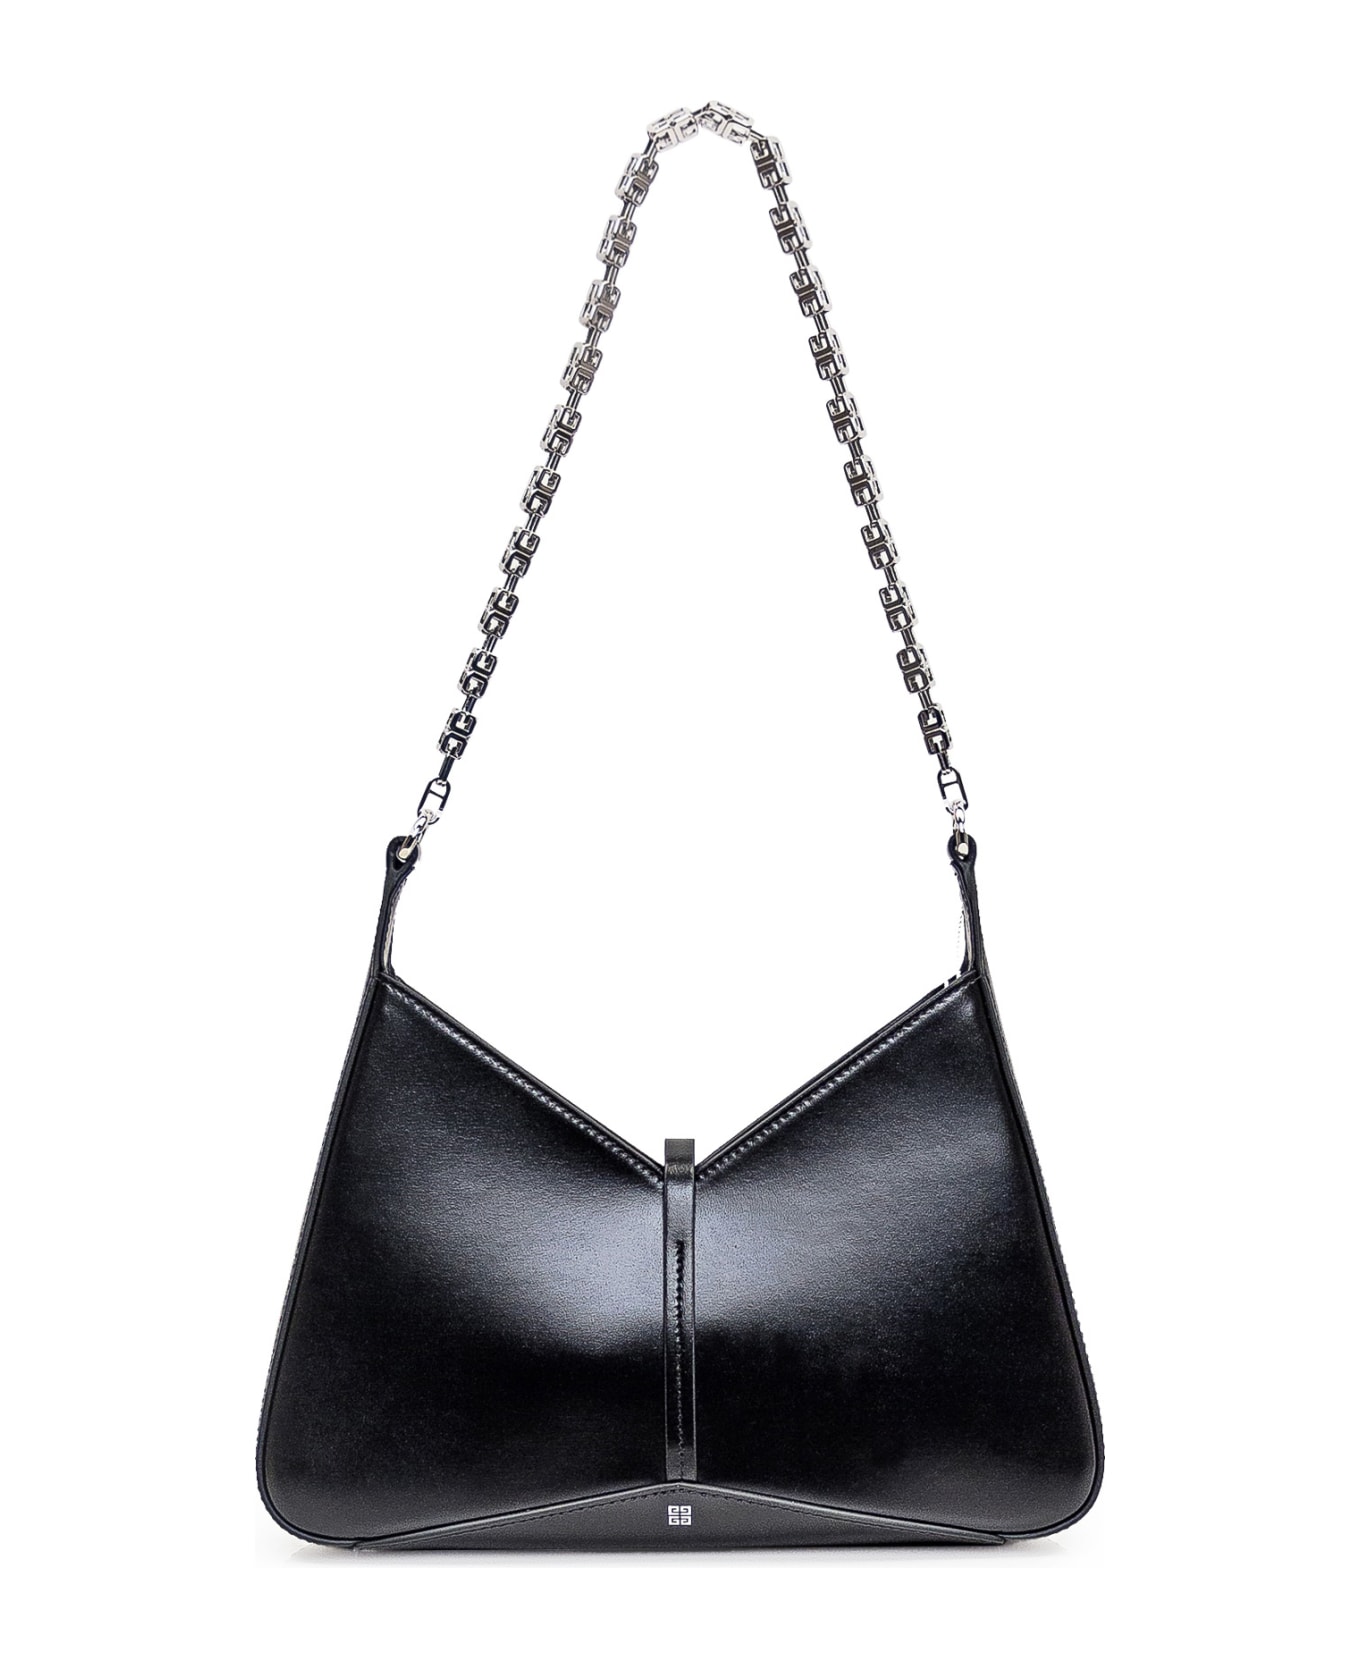 Givenchy Cut Out Small Shoulder Bag - Black